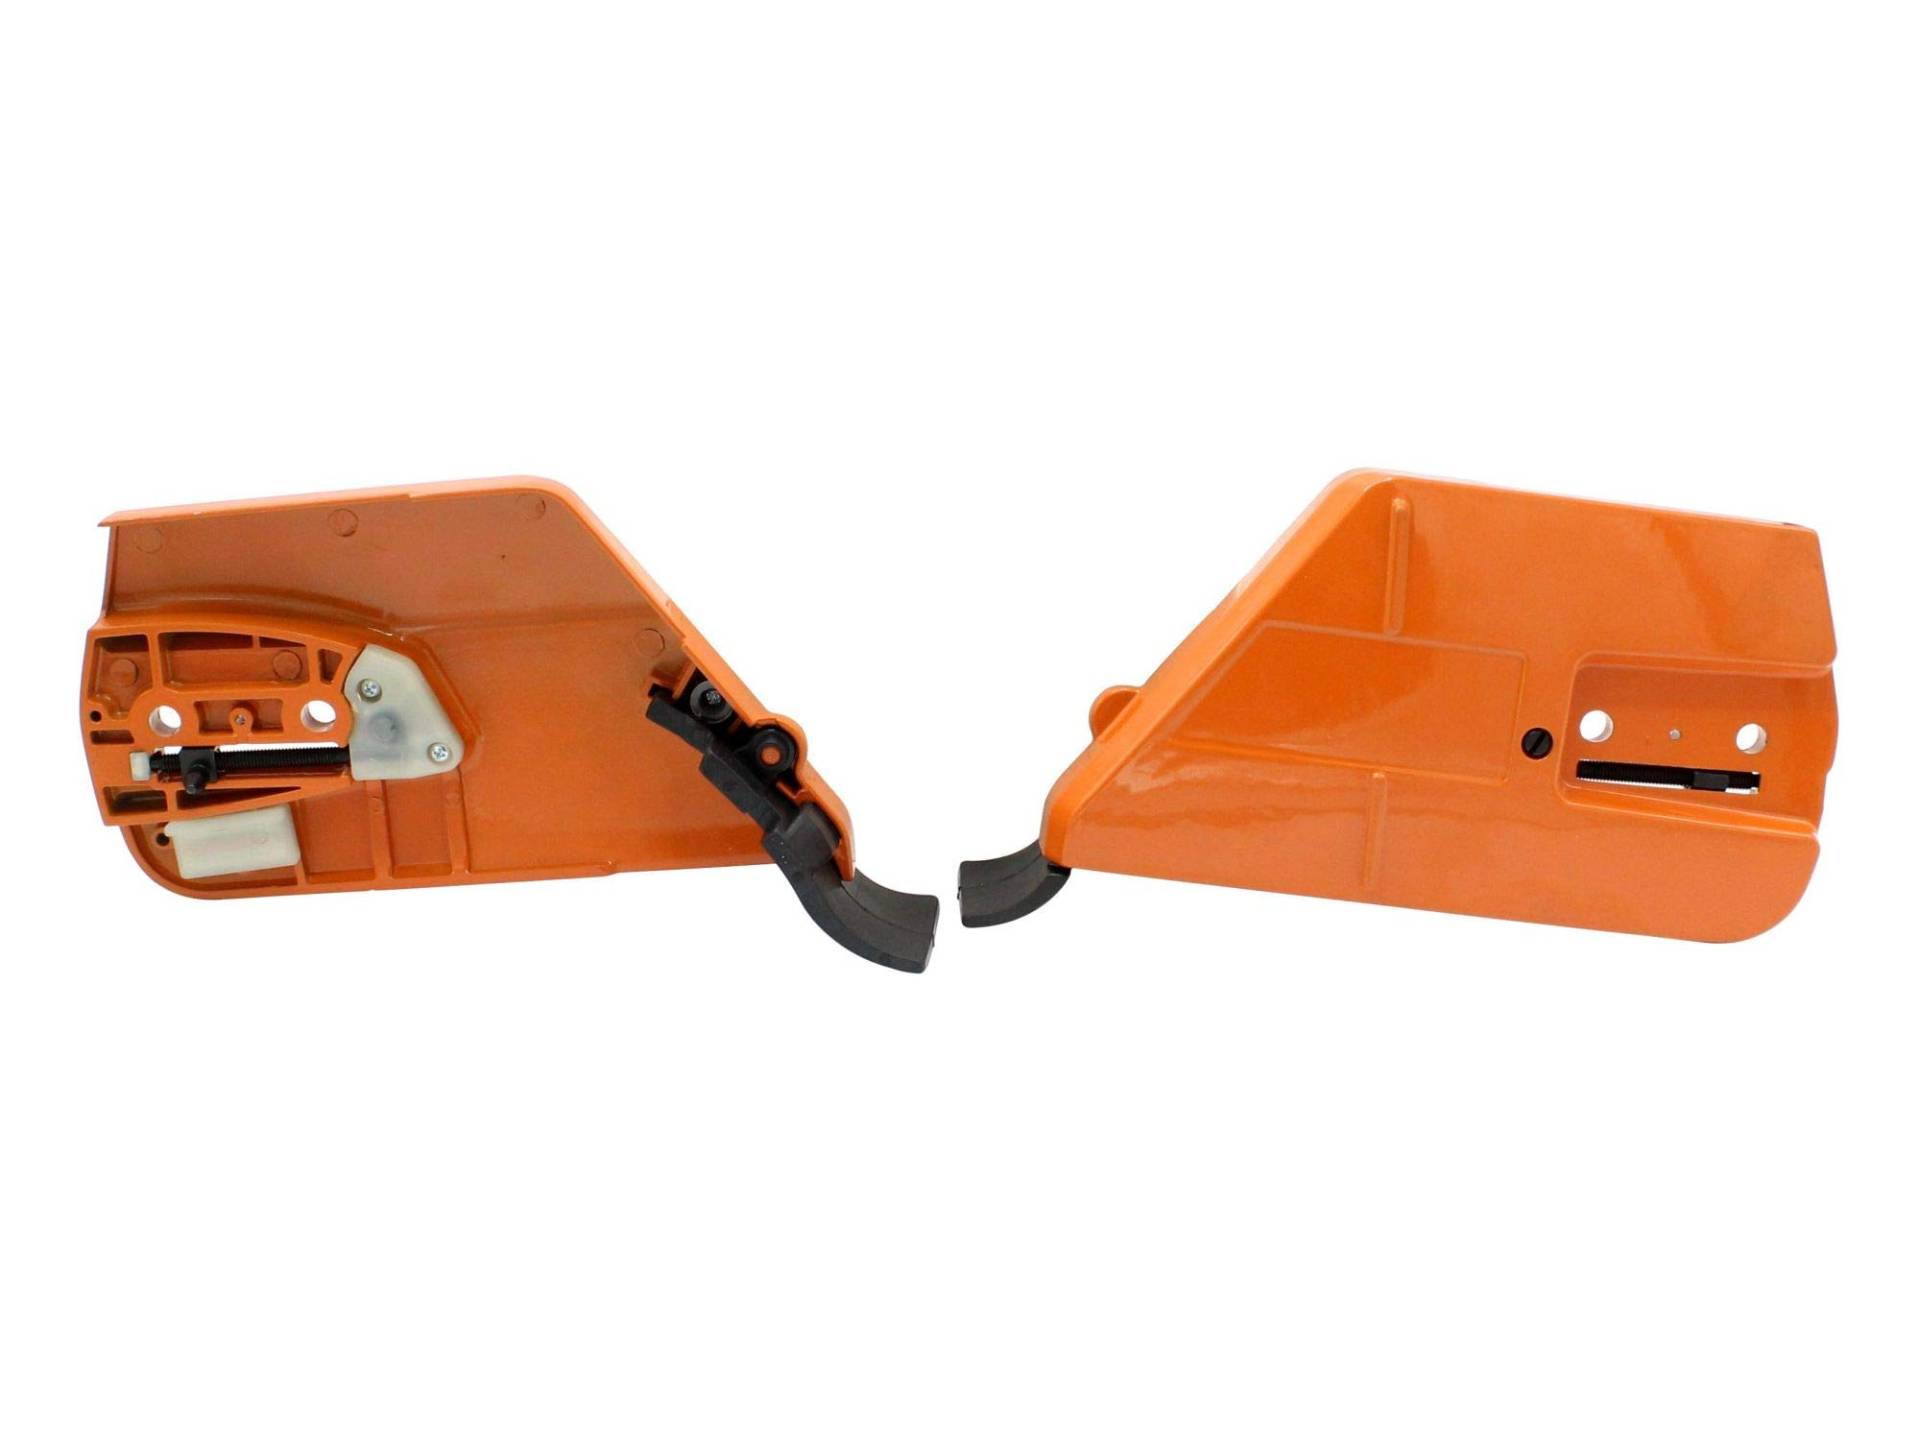 SECURA Kettenraddeckel kompatibel mit Husqvarna 576 XP AutoTune Motorsäge von SECURA